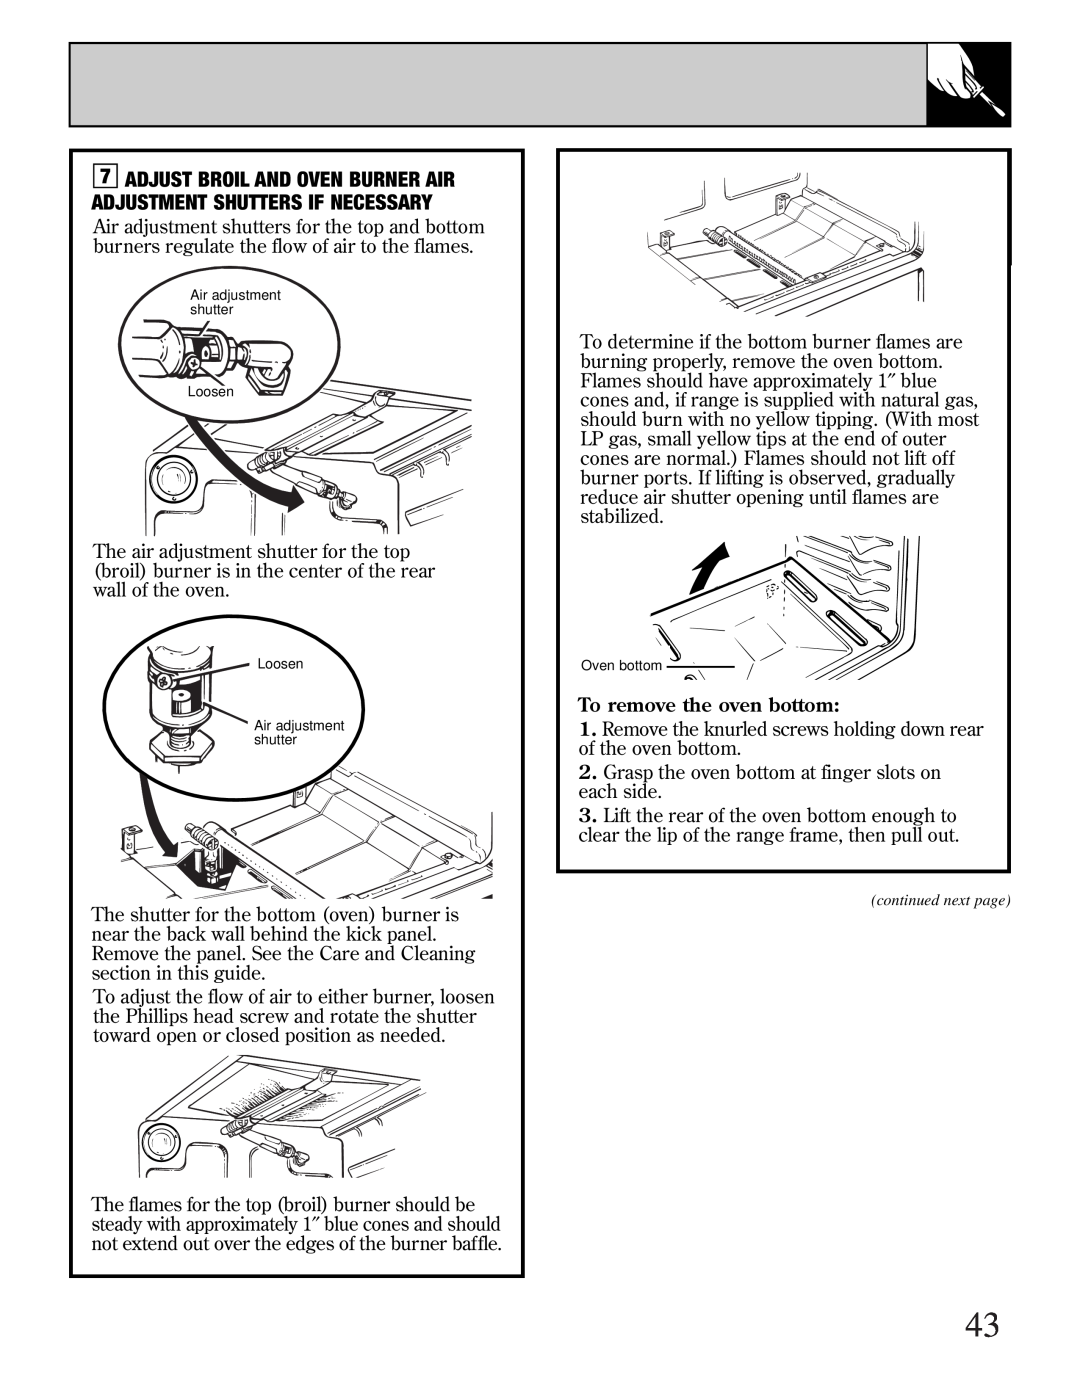 GE JR EGR3000, EGR3001, JGBP40 manual To remove the oven bottom 